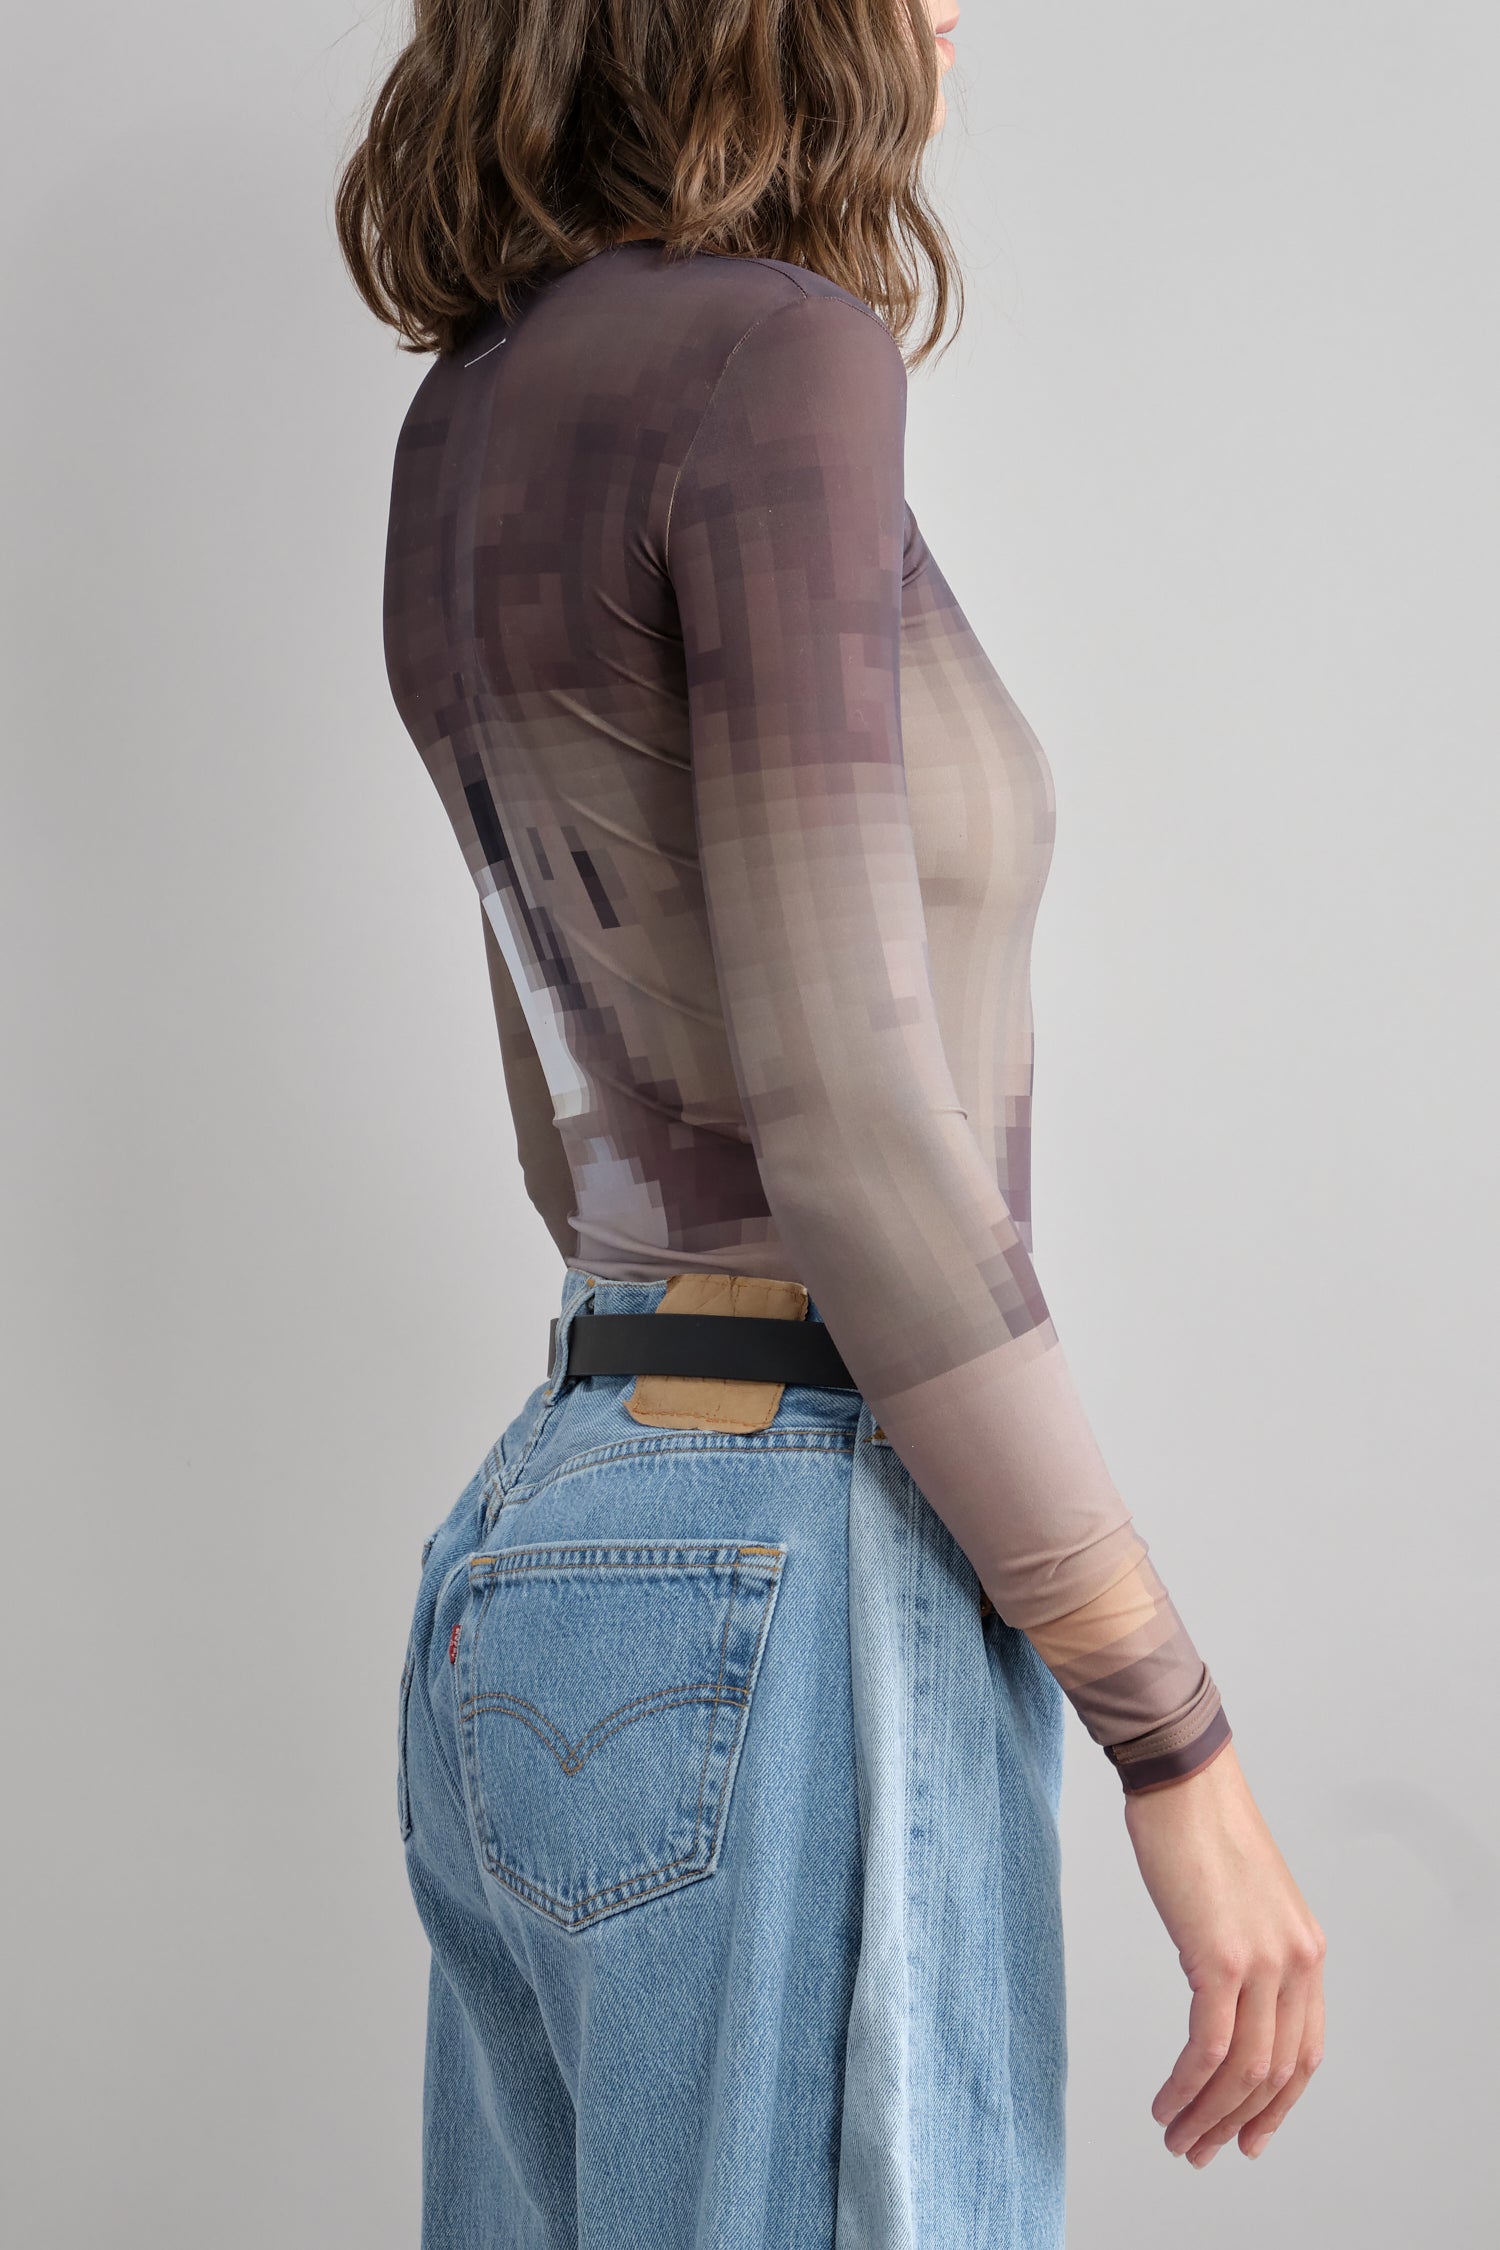 Side of Pixelated Bodysuit